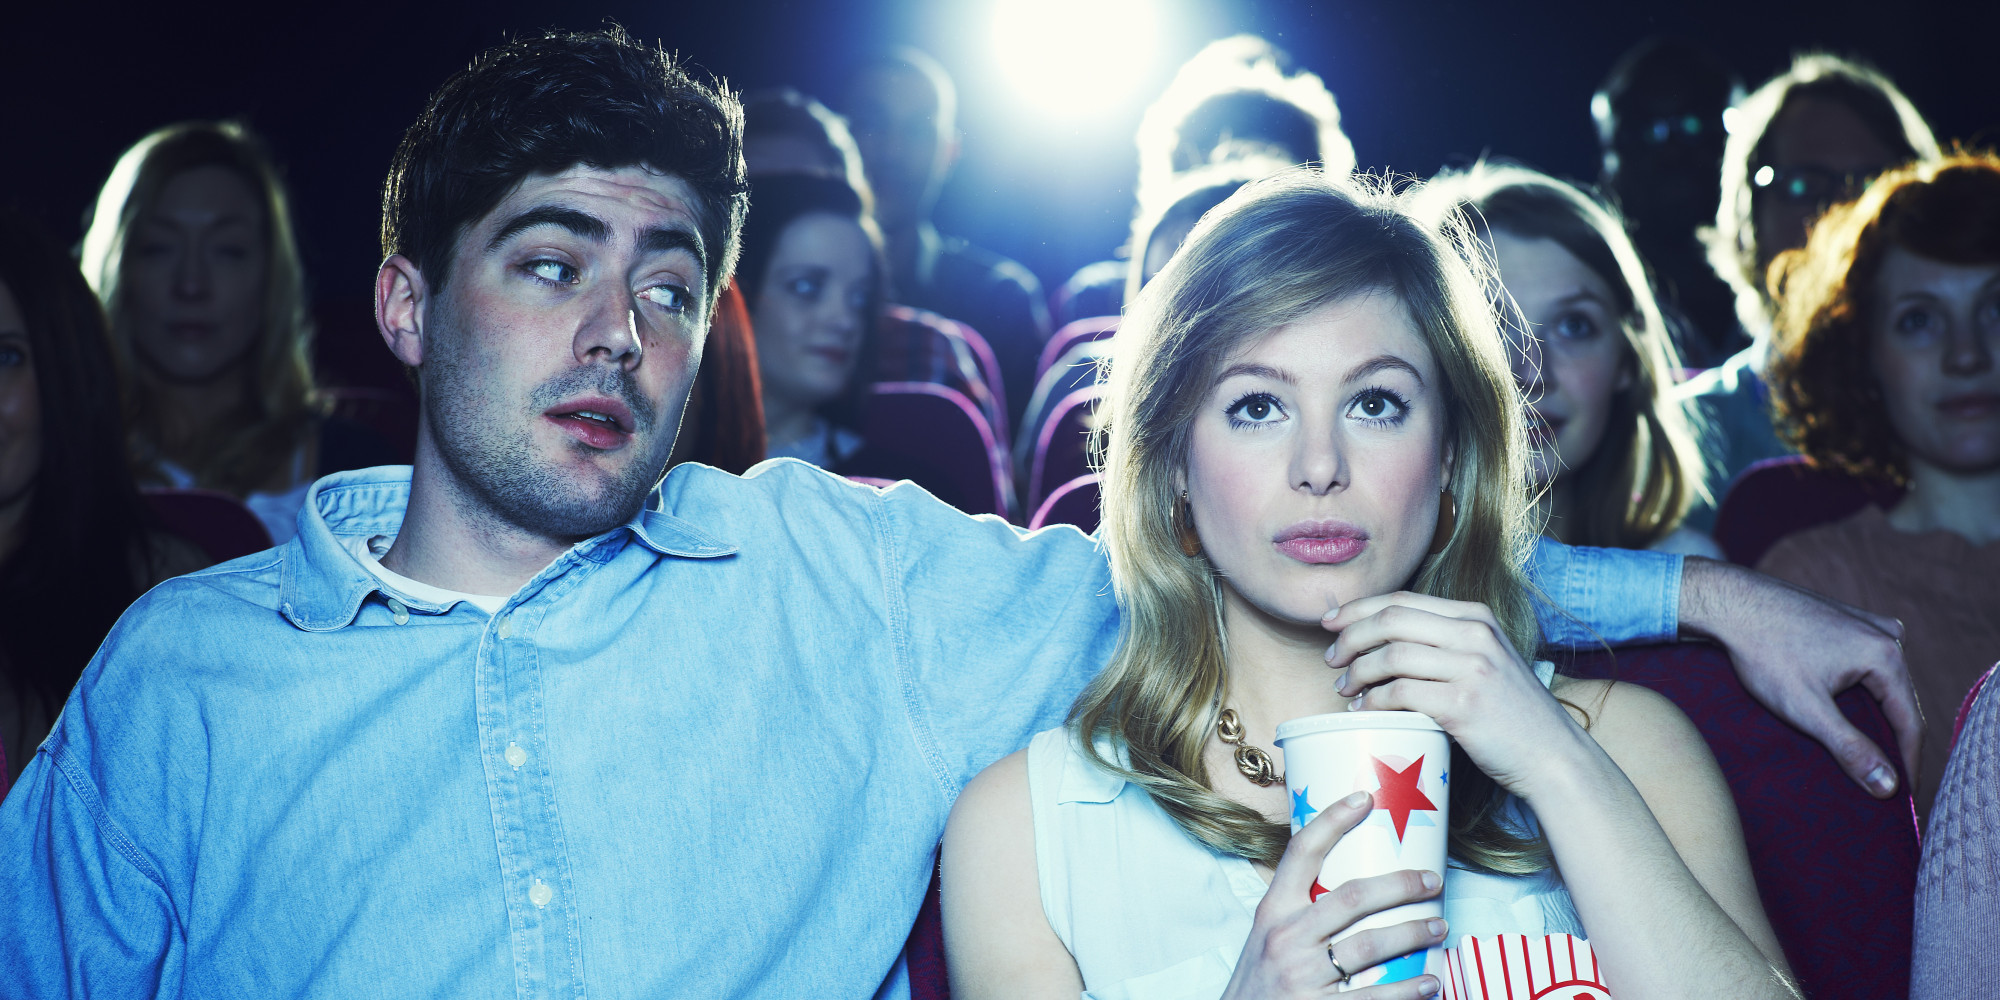 couple enjoying a movie at the cinema